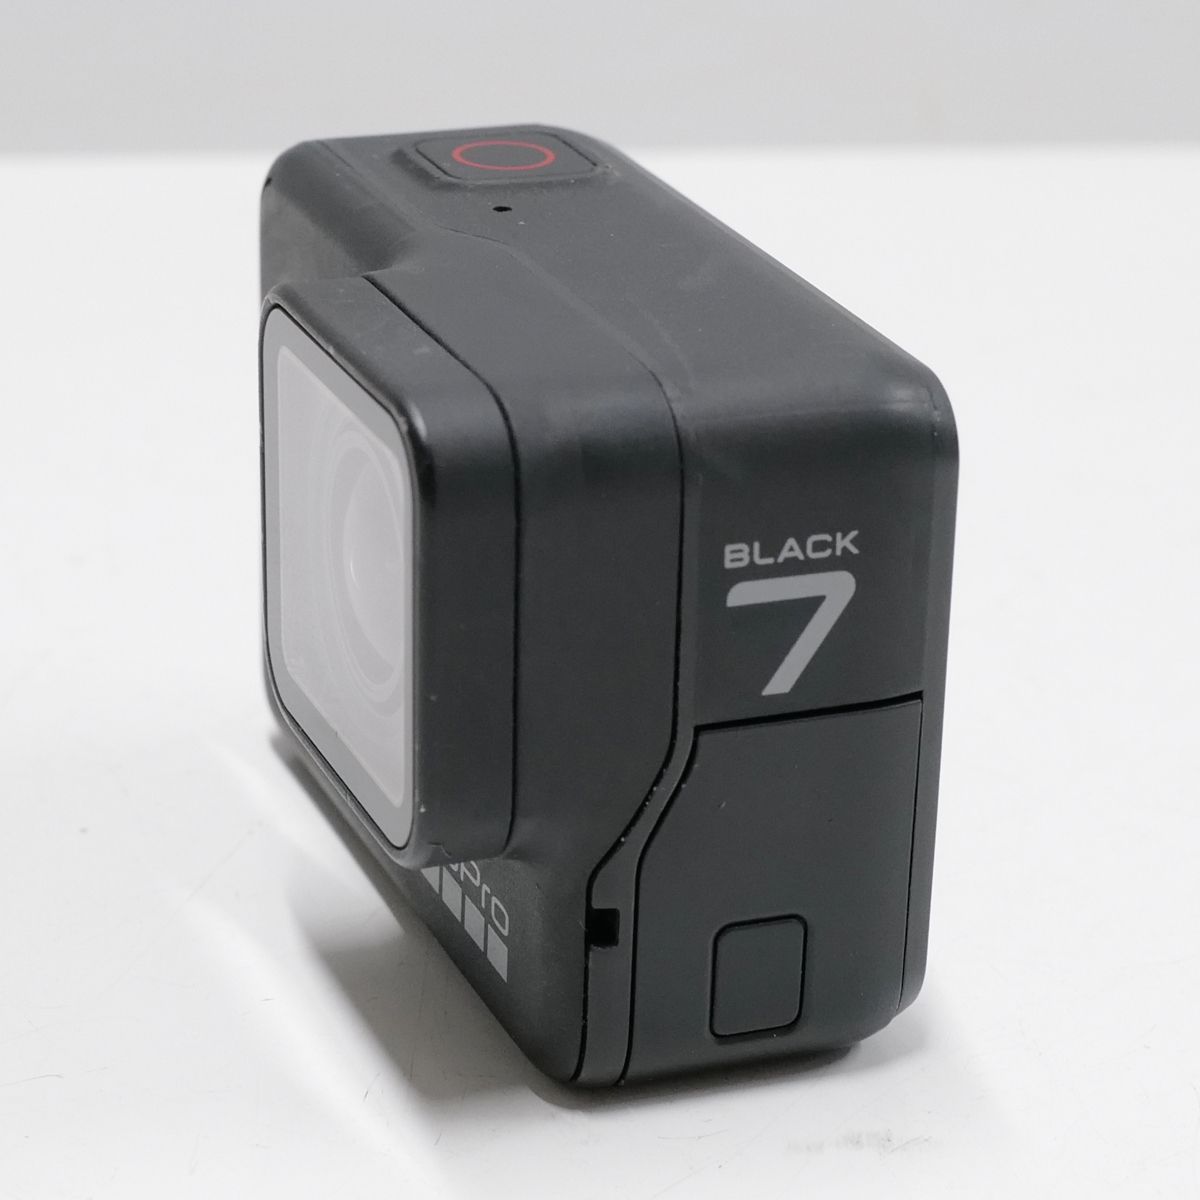 GoPro HERO7 Black ウェアラブルカメラ USED美品 本体+バッテリー 4K動画 CHDHX-701-FW 完動品 中古 CE4029  - メルカリ